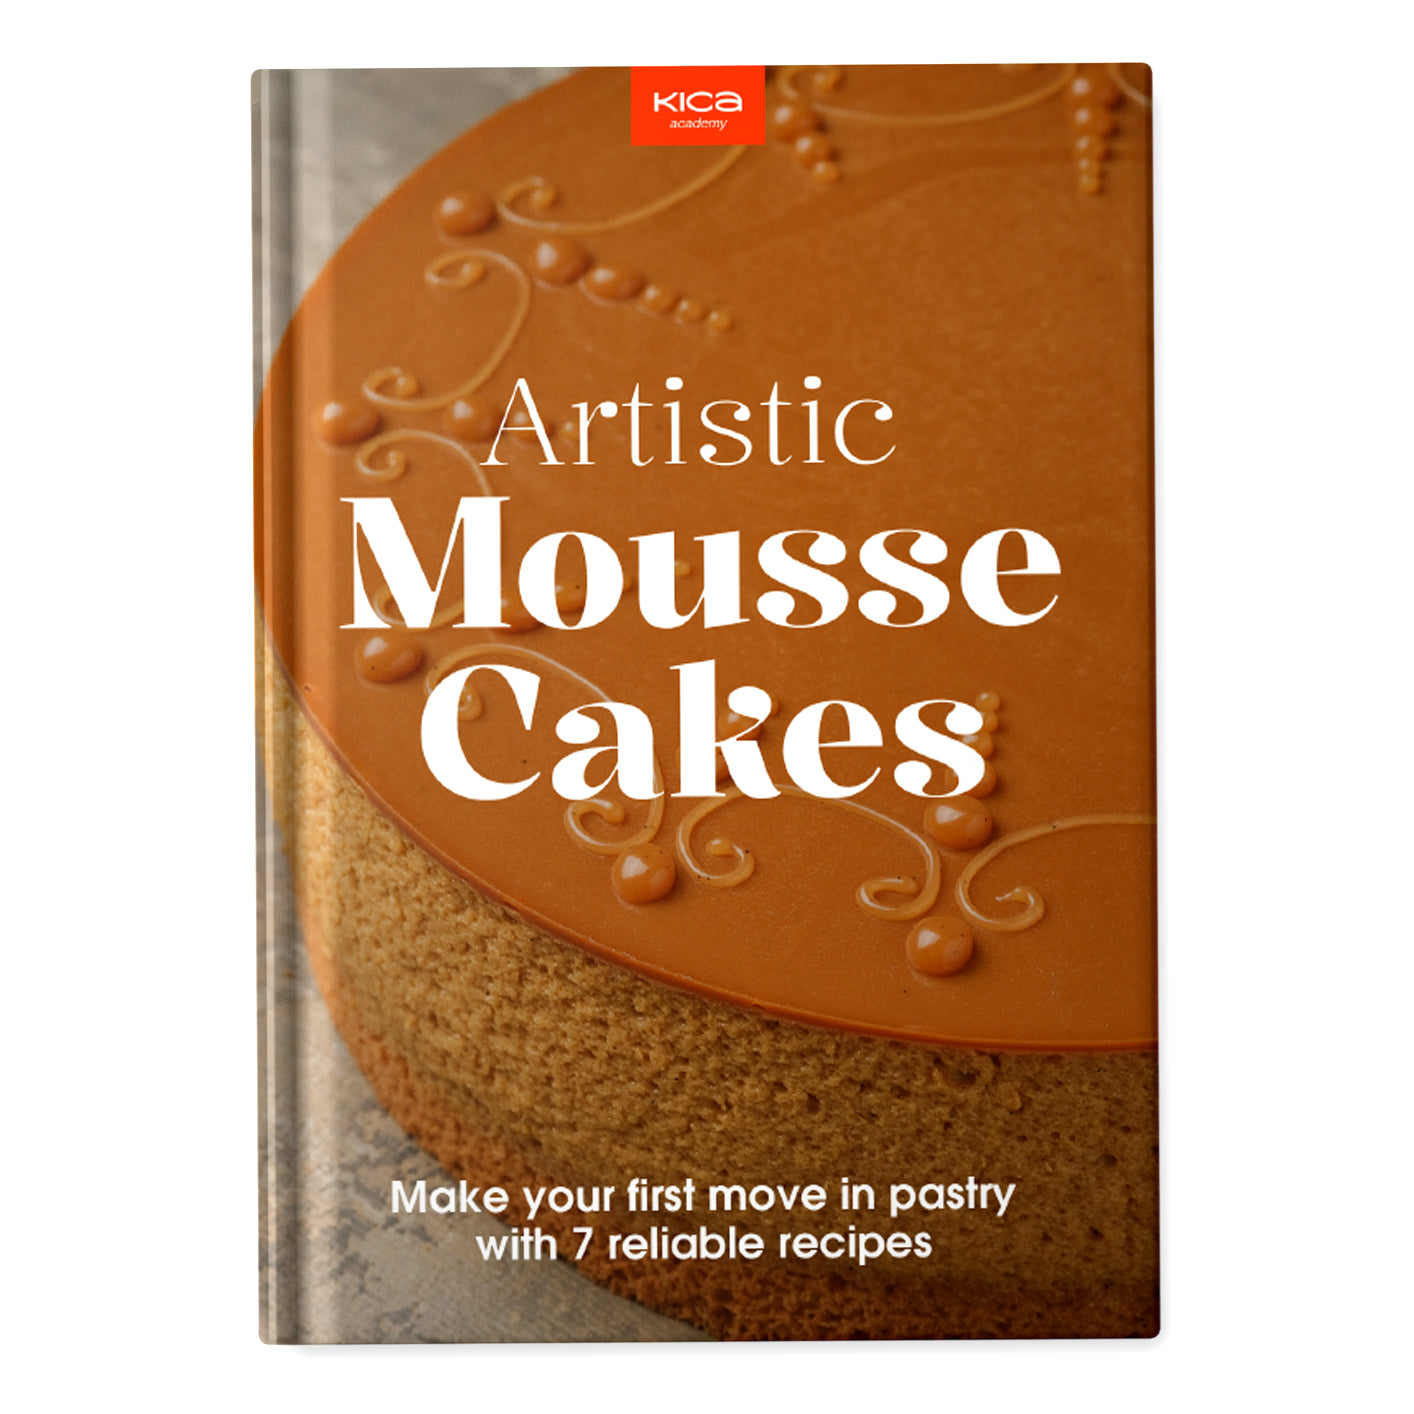 Artistic Mousse Cakes e-book cover 